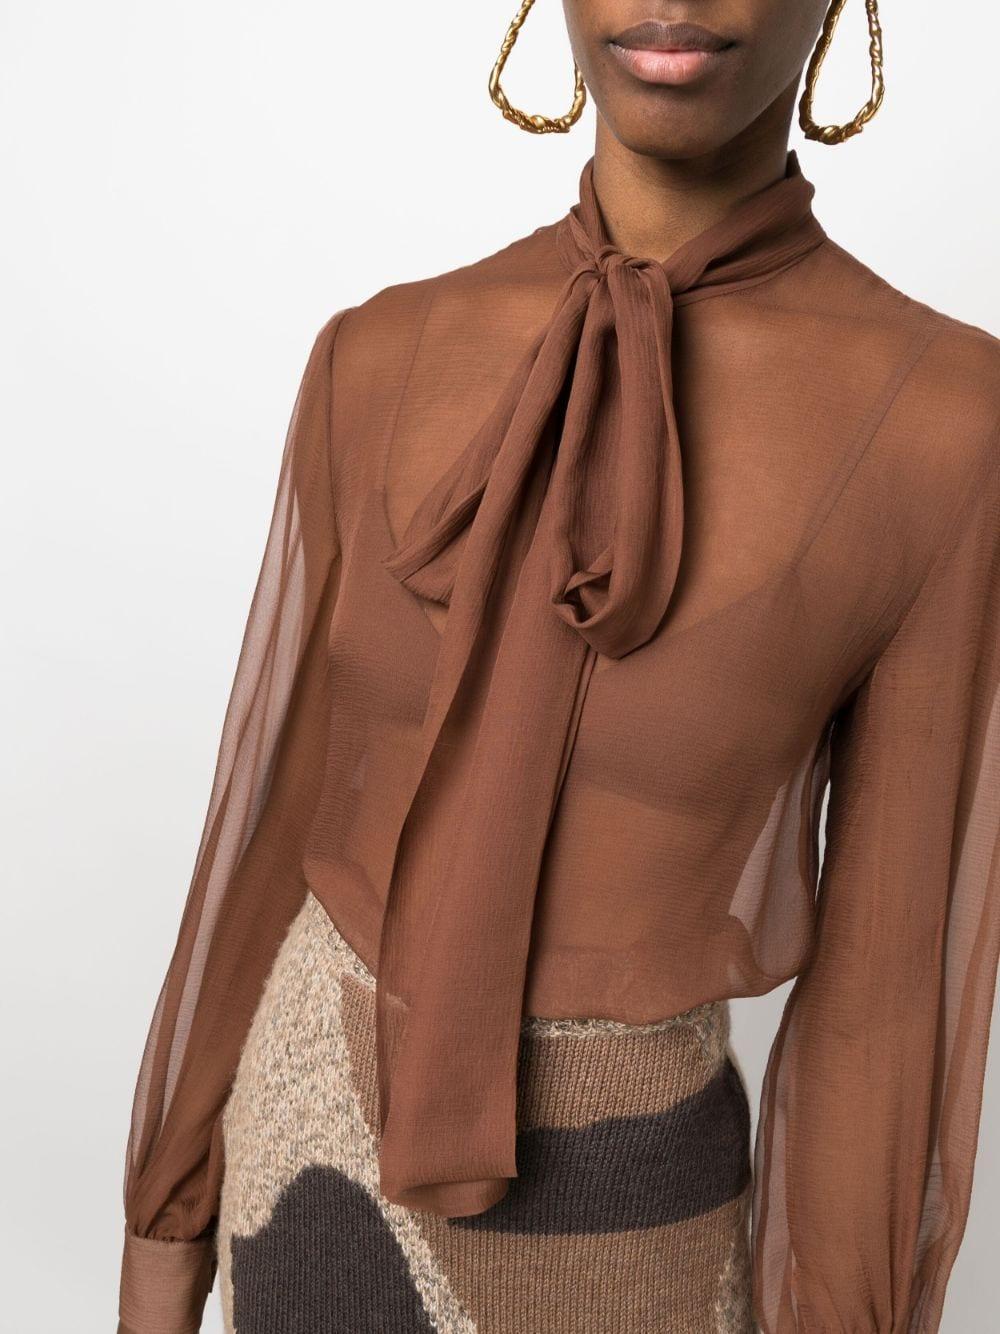 Moschino Semi-sheer Silk Blouse in Brown | Lyst